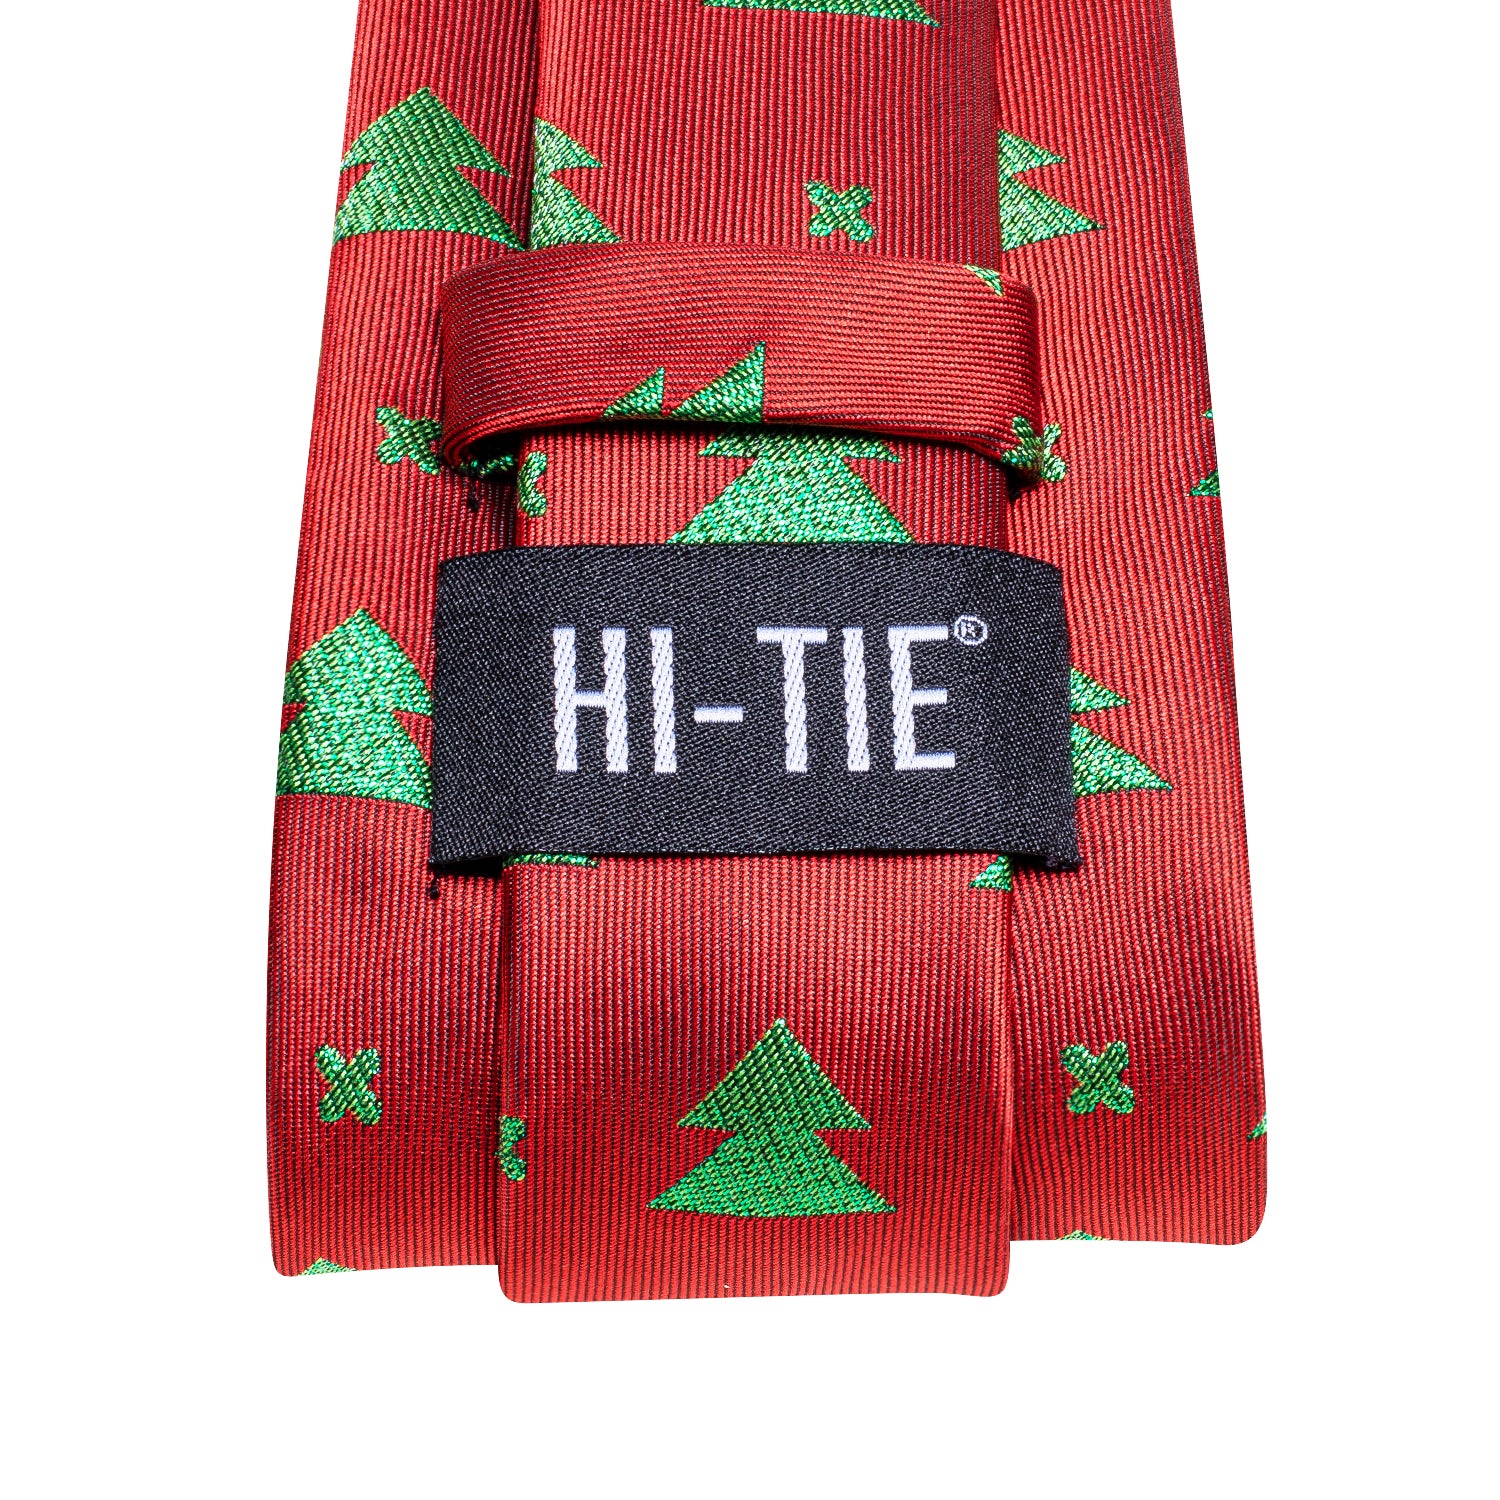  Red Green Christmas Tree Necktie Pocket Square Cufflinks Set